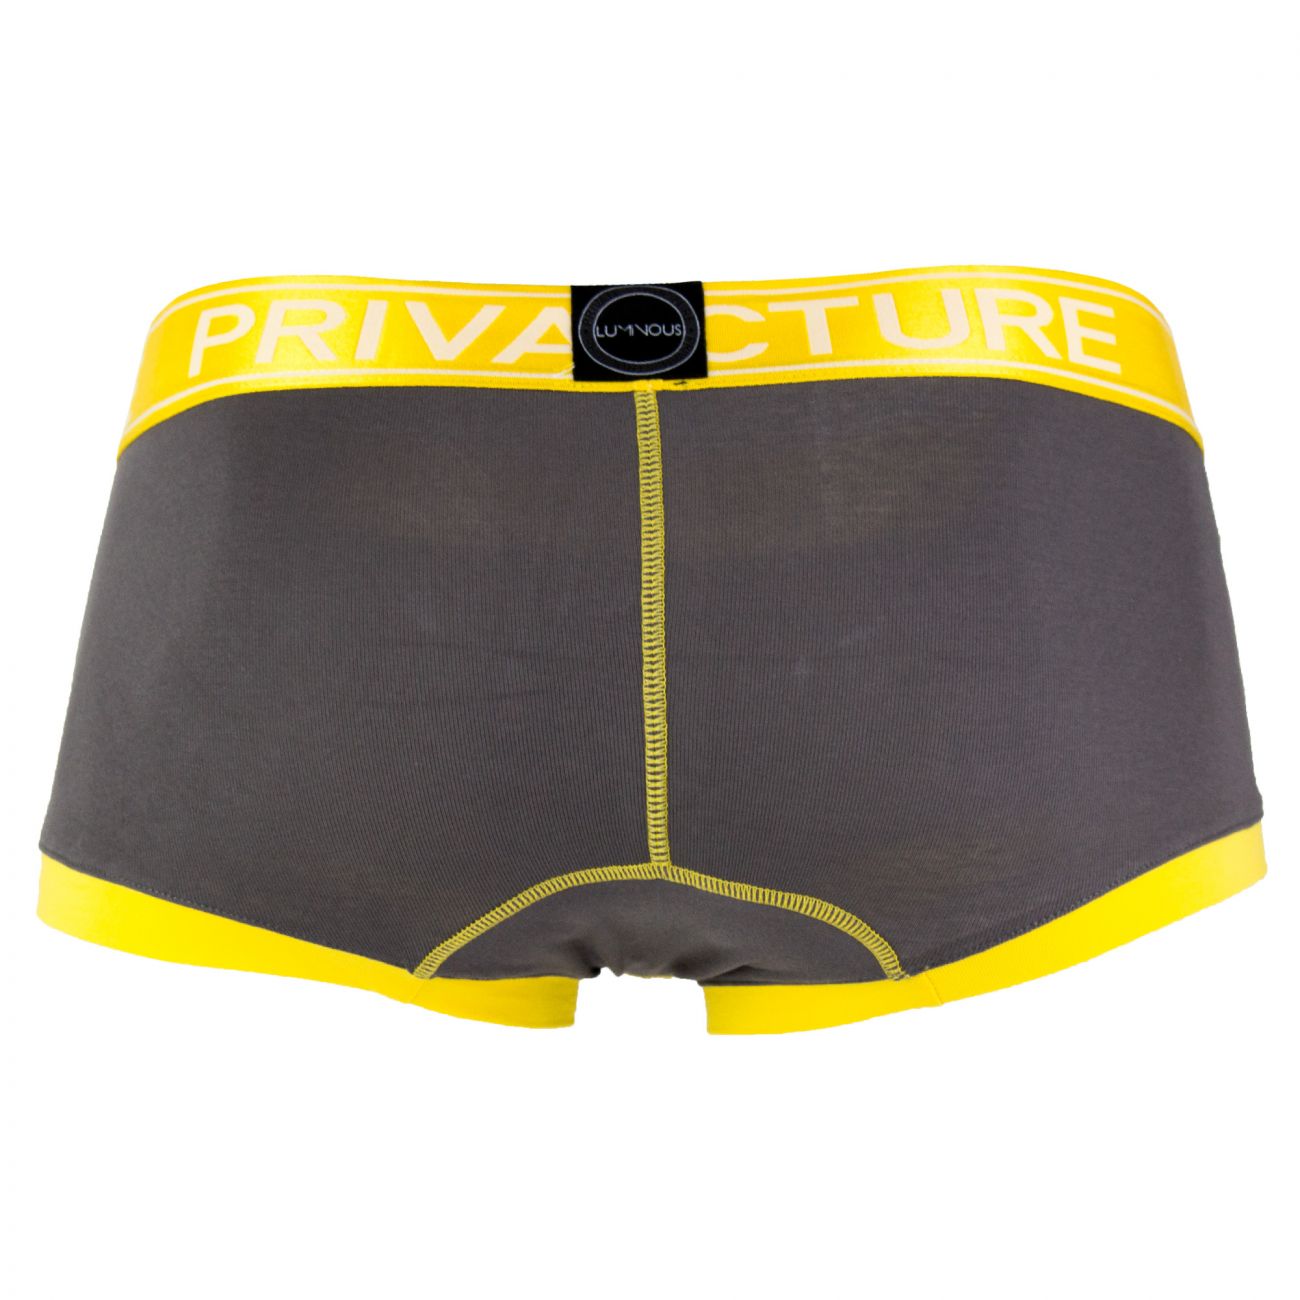 Underwear: Private-Structure SLUZ3680 Soho Luminous Boxer Briefs | eBay